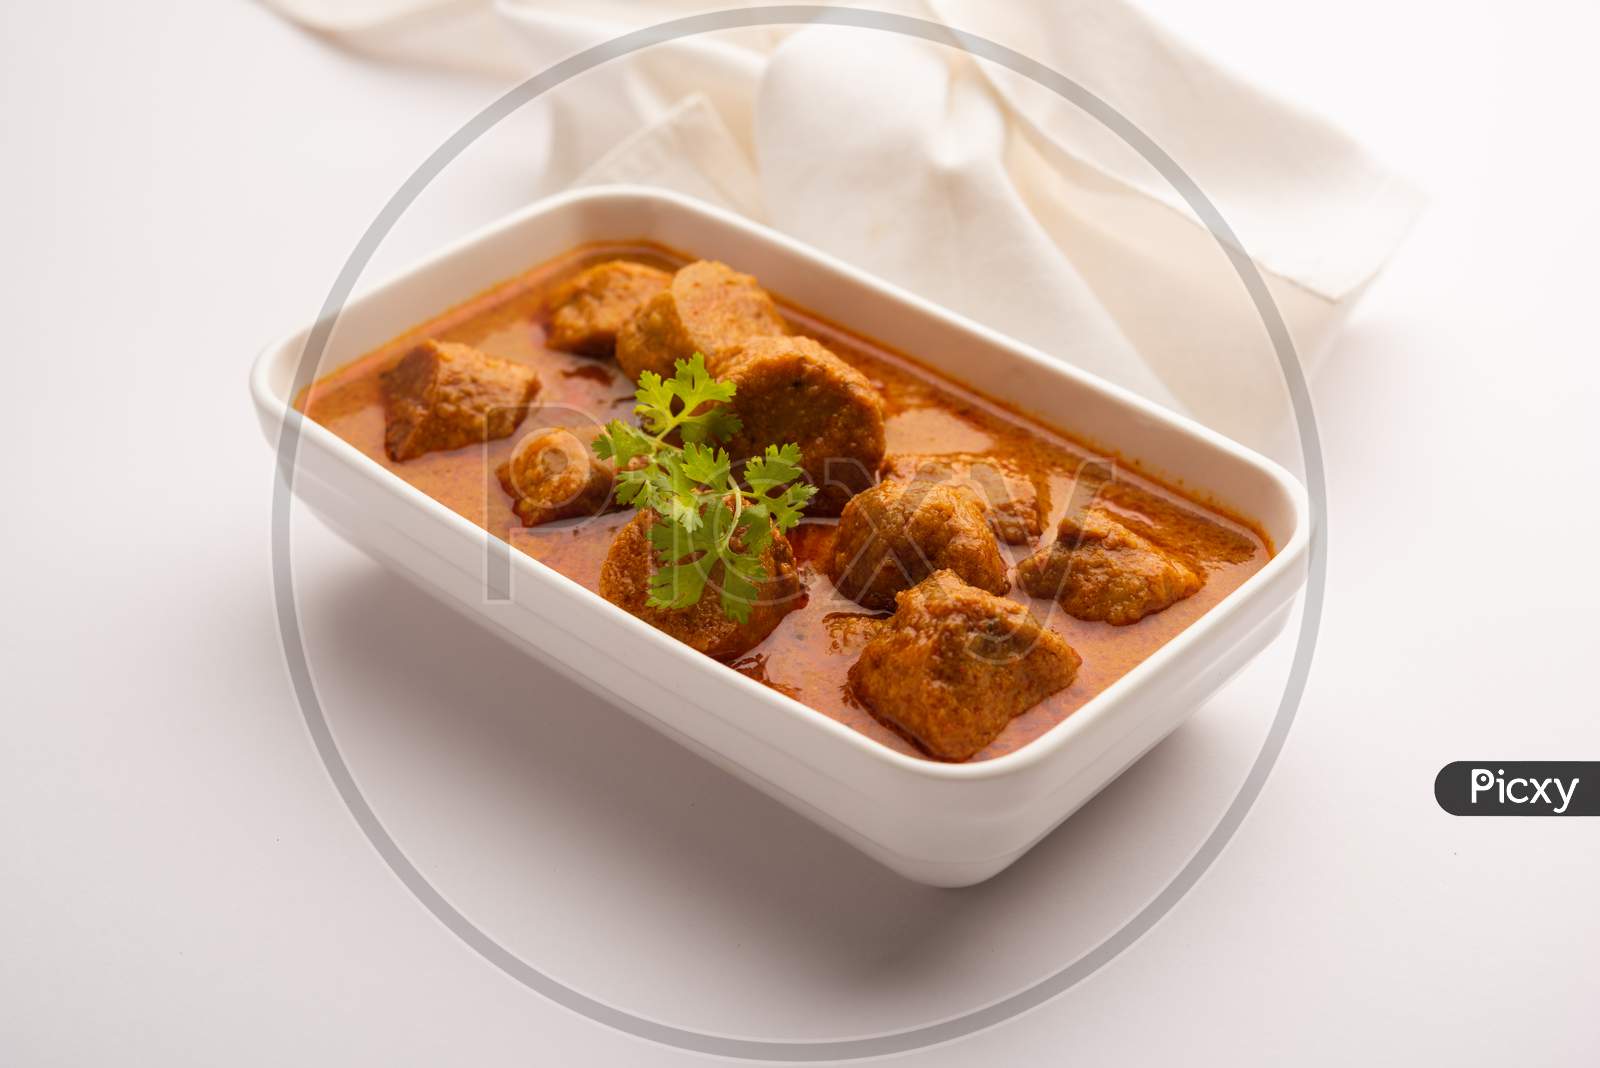 Besan Gatte Ki Sabzi Or Gatta Curry Recipe, Popular Rajasthani Menu For Lunch Or Dinner